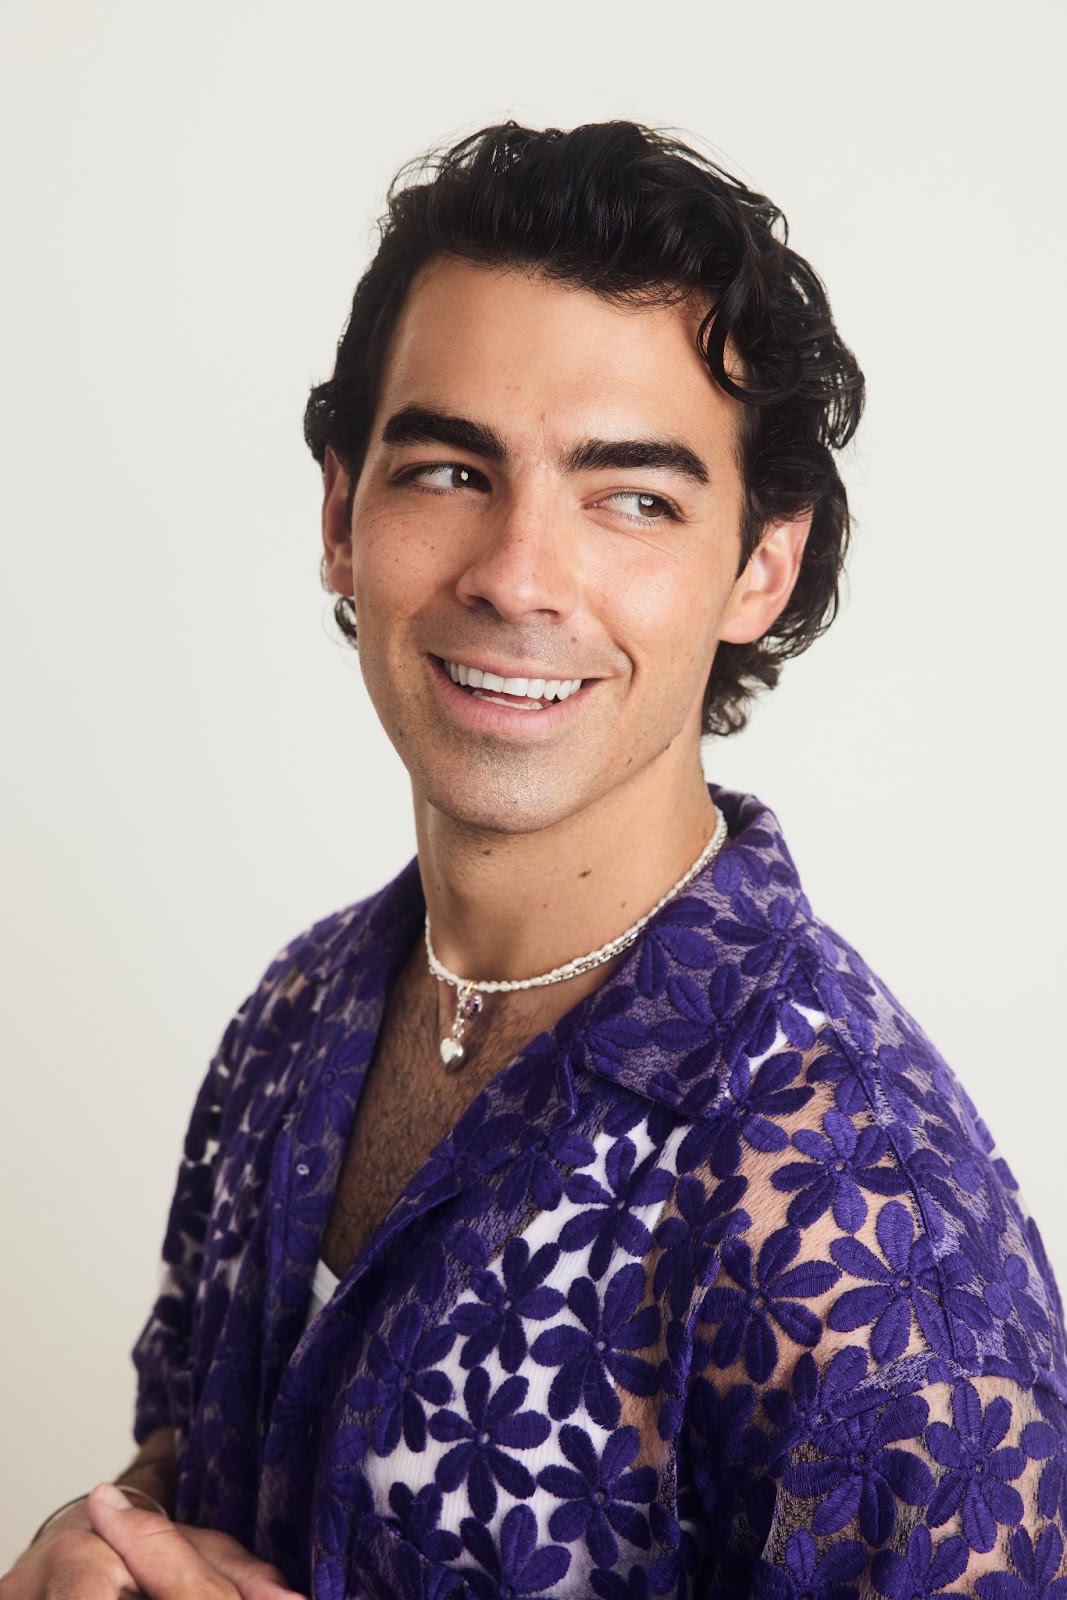 Joe Jonas wrinkle-free, smiling, and wearing a purple floral shirt